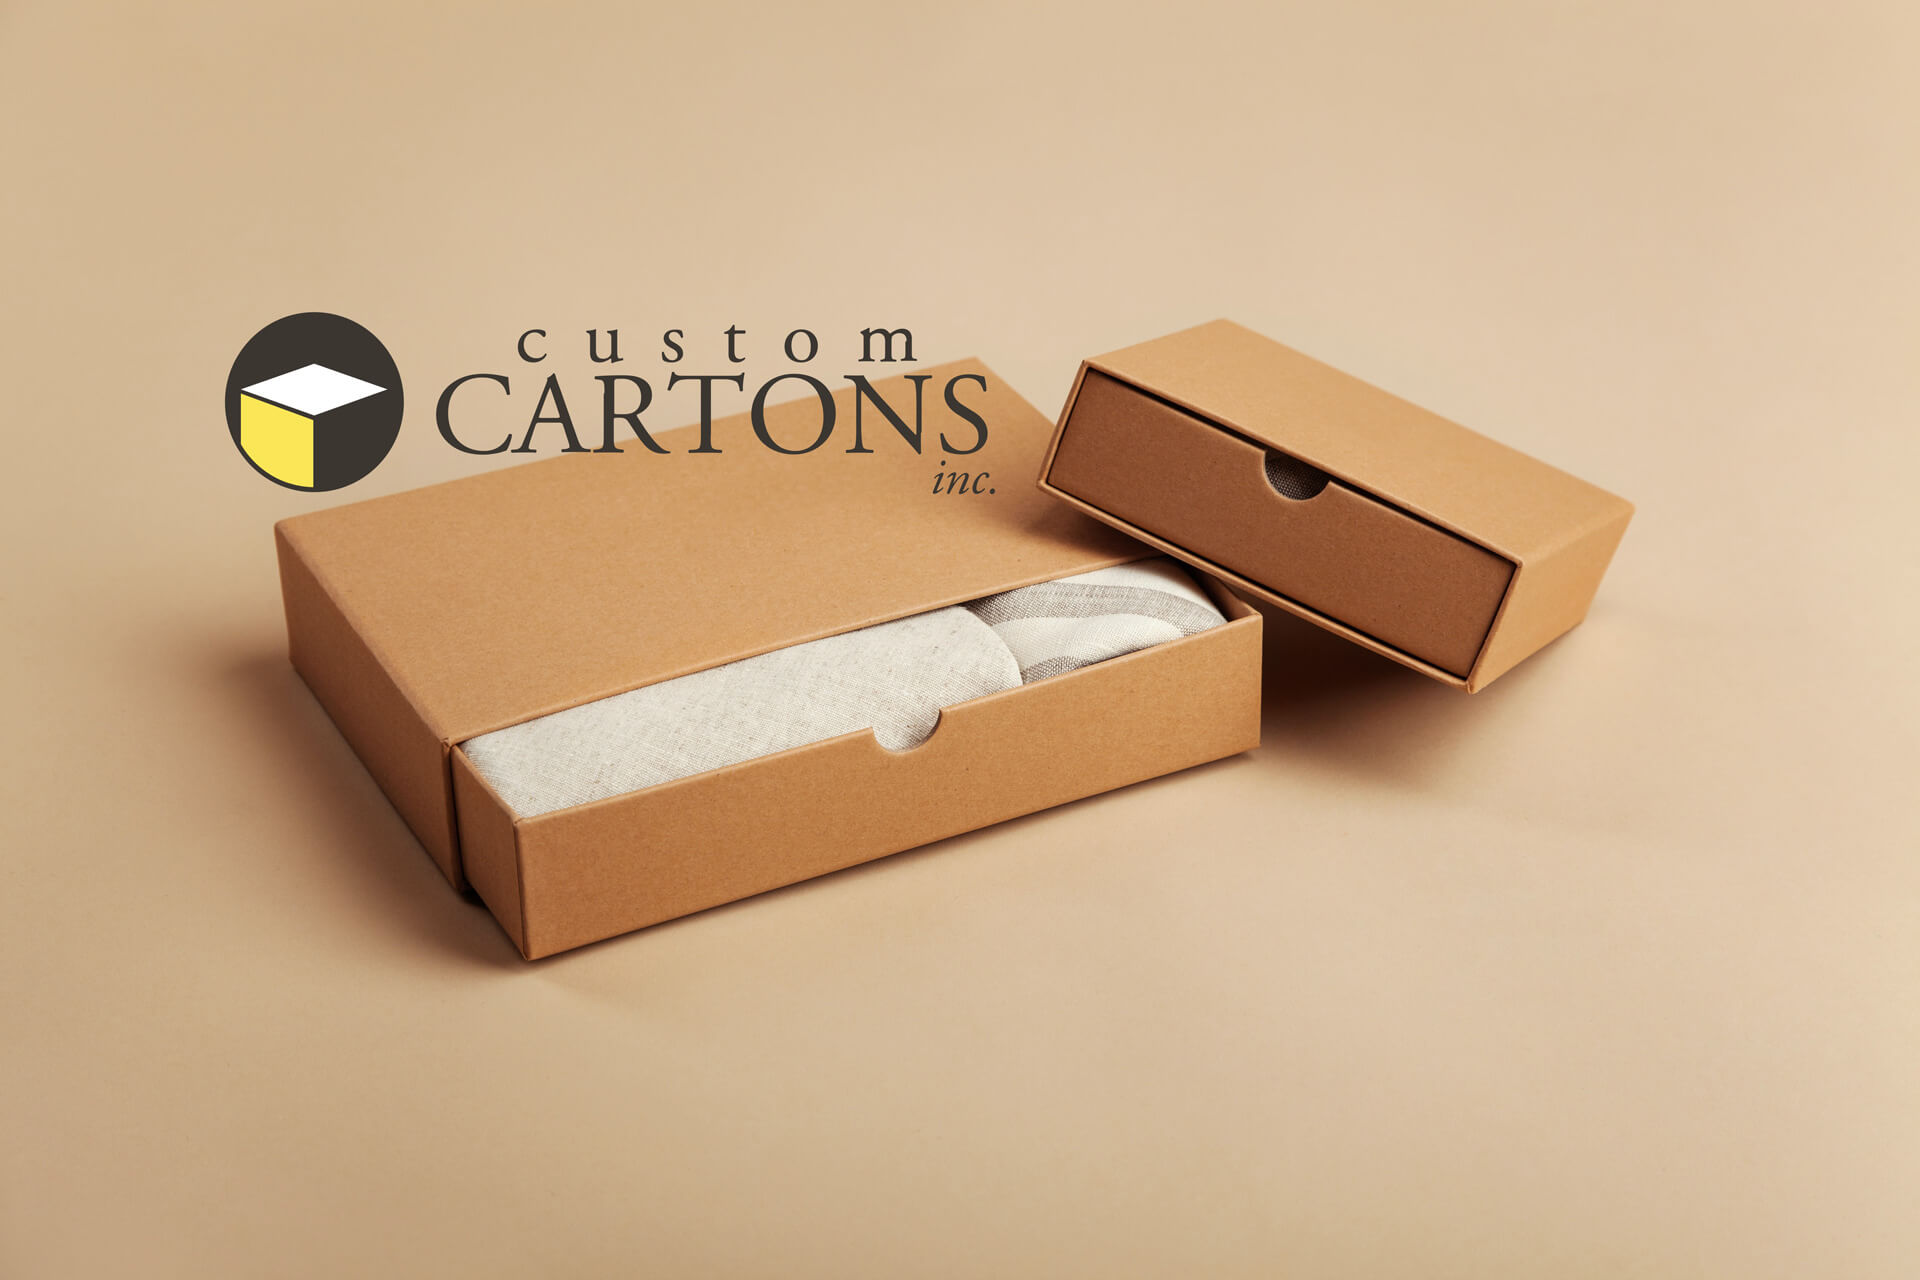 Custom Cartons' Philosophy